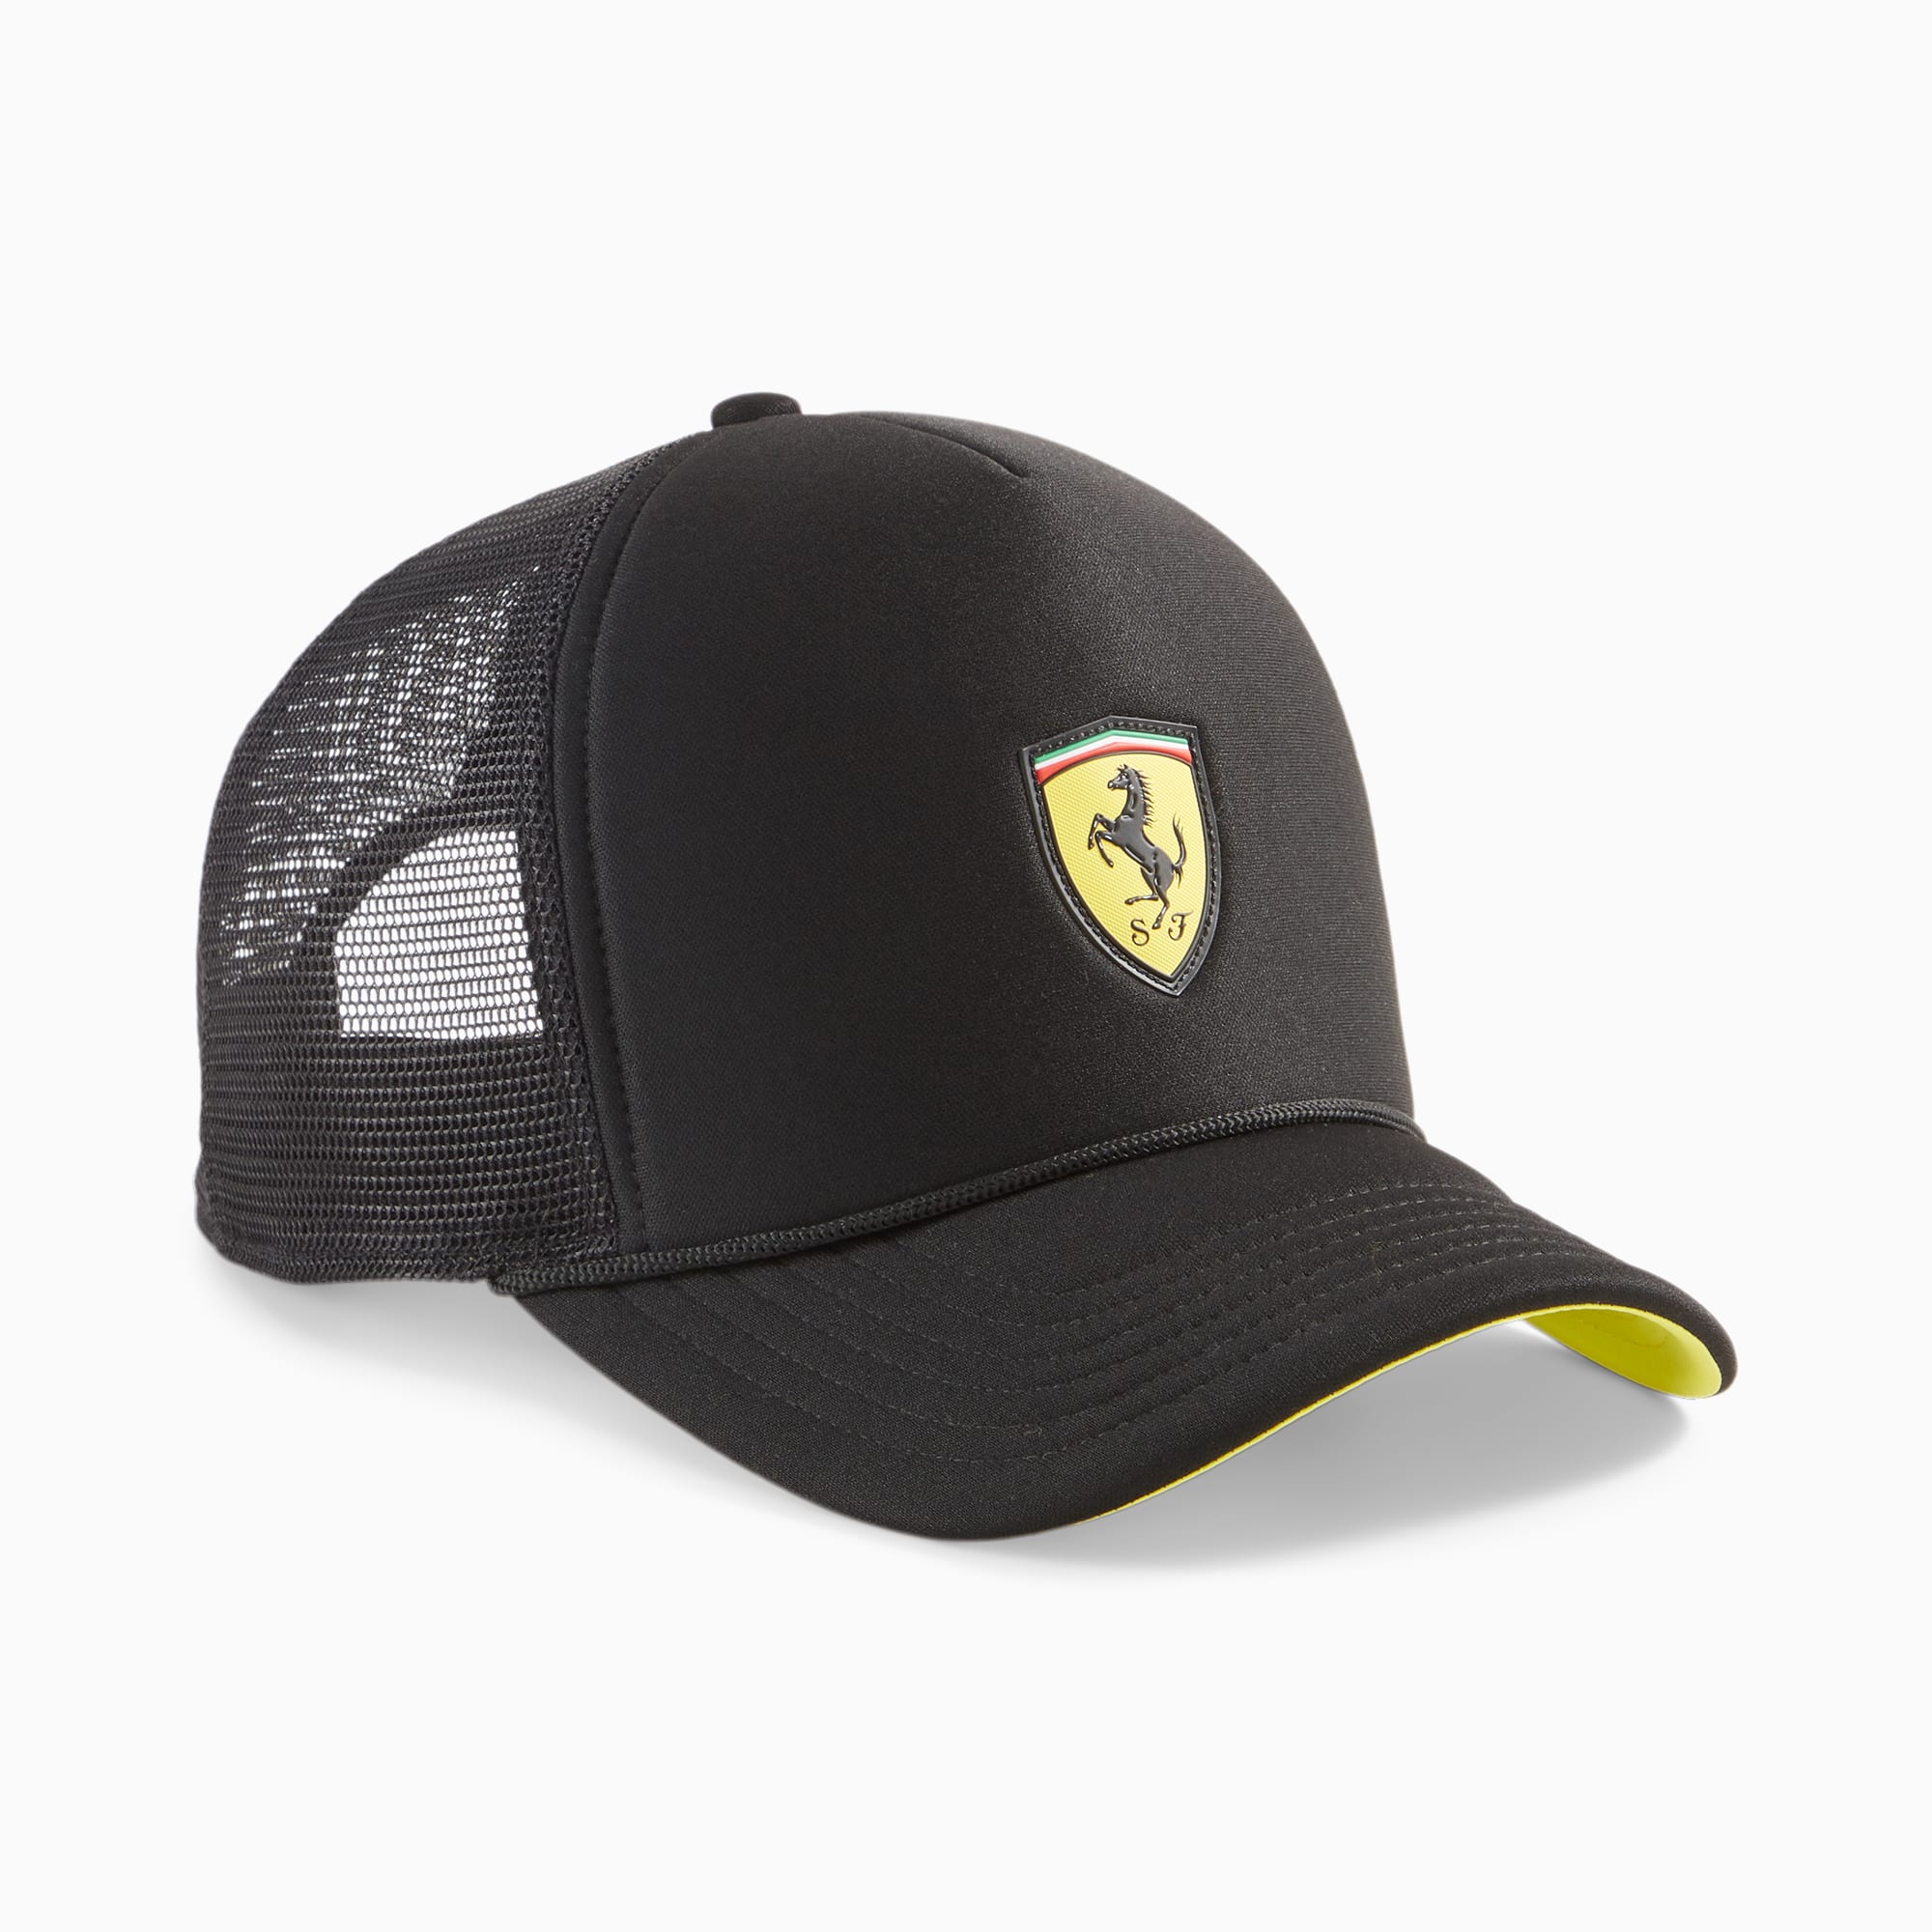 PUMA Scuderia Trucker | Ferrari Cap Race